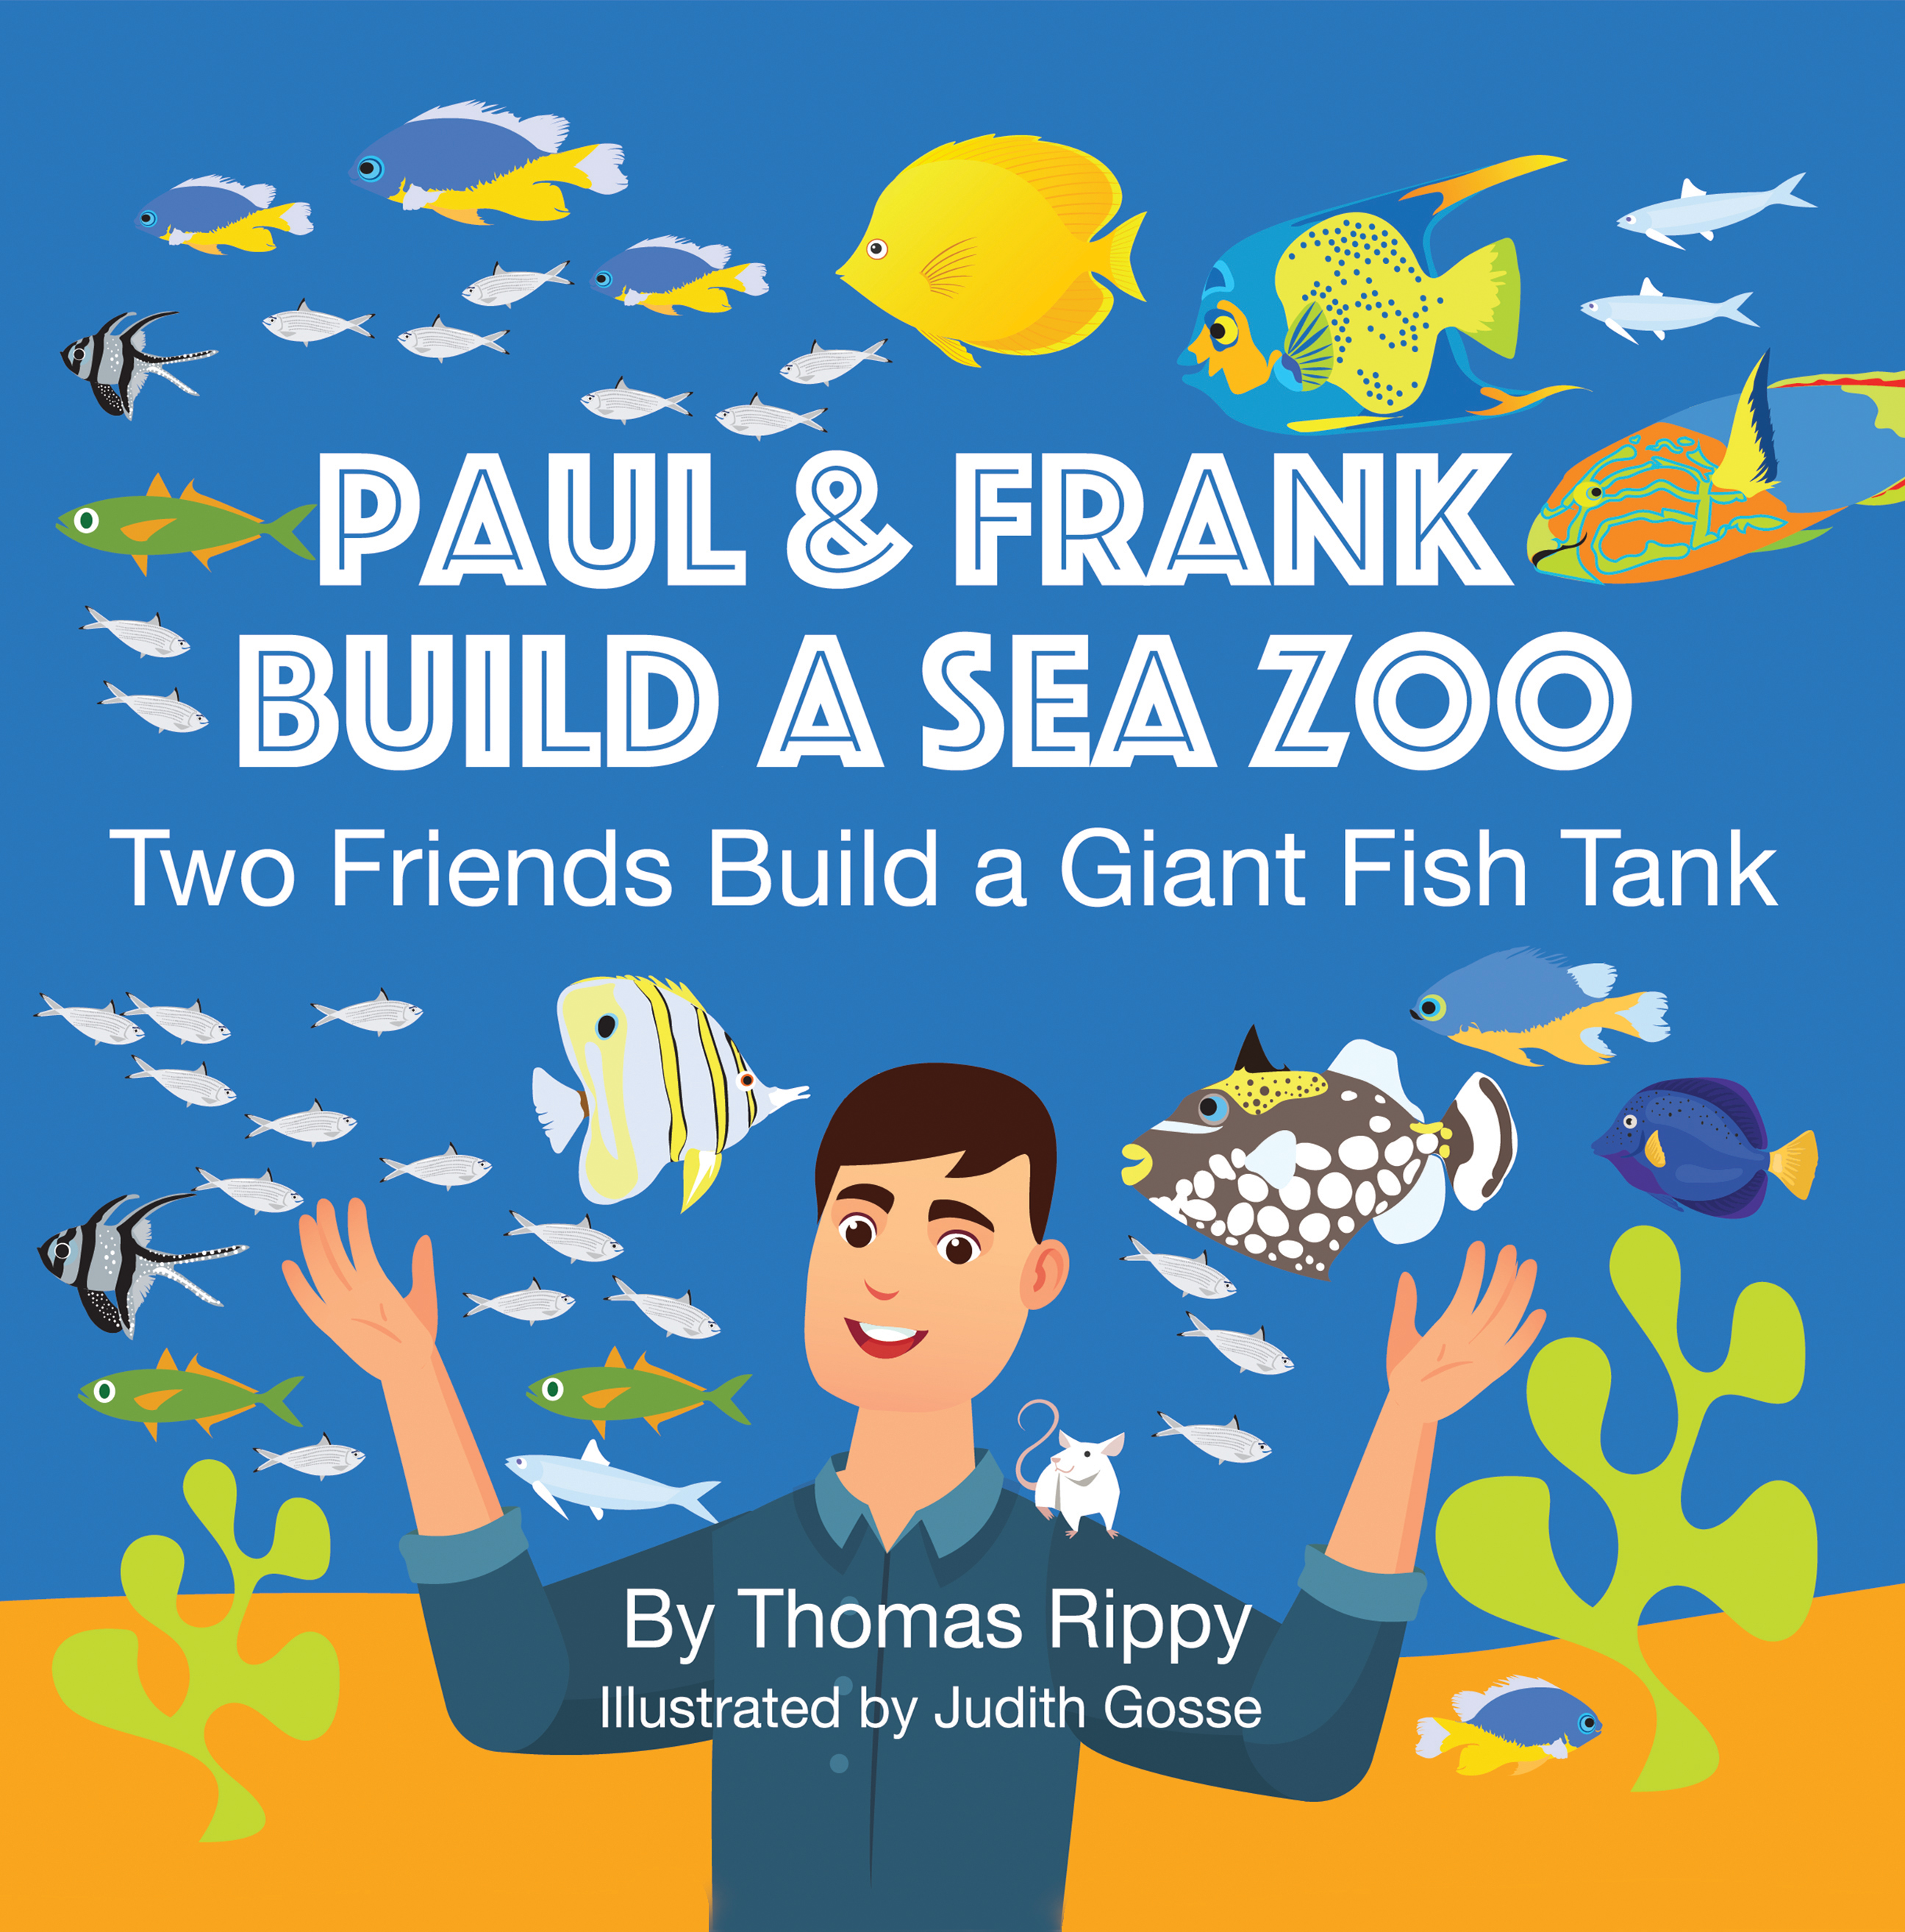 Paul & Frank Build A Sea Zoo Book Illustration